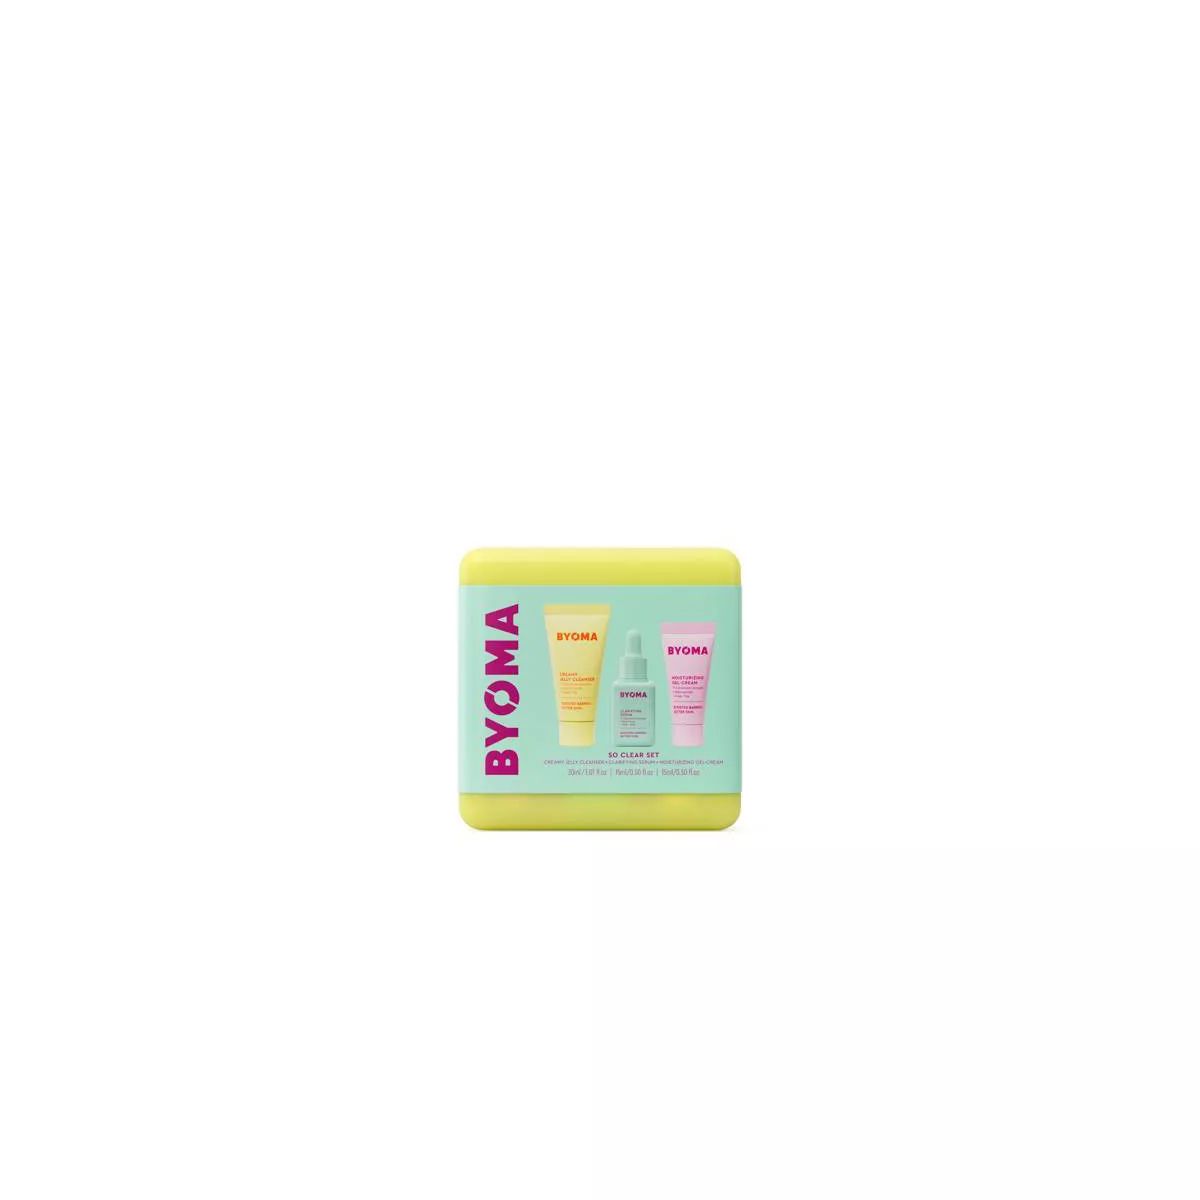 BYOMA Clarifying Starter Skincare Kit - 2.01 fl oz | Target